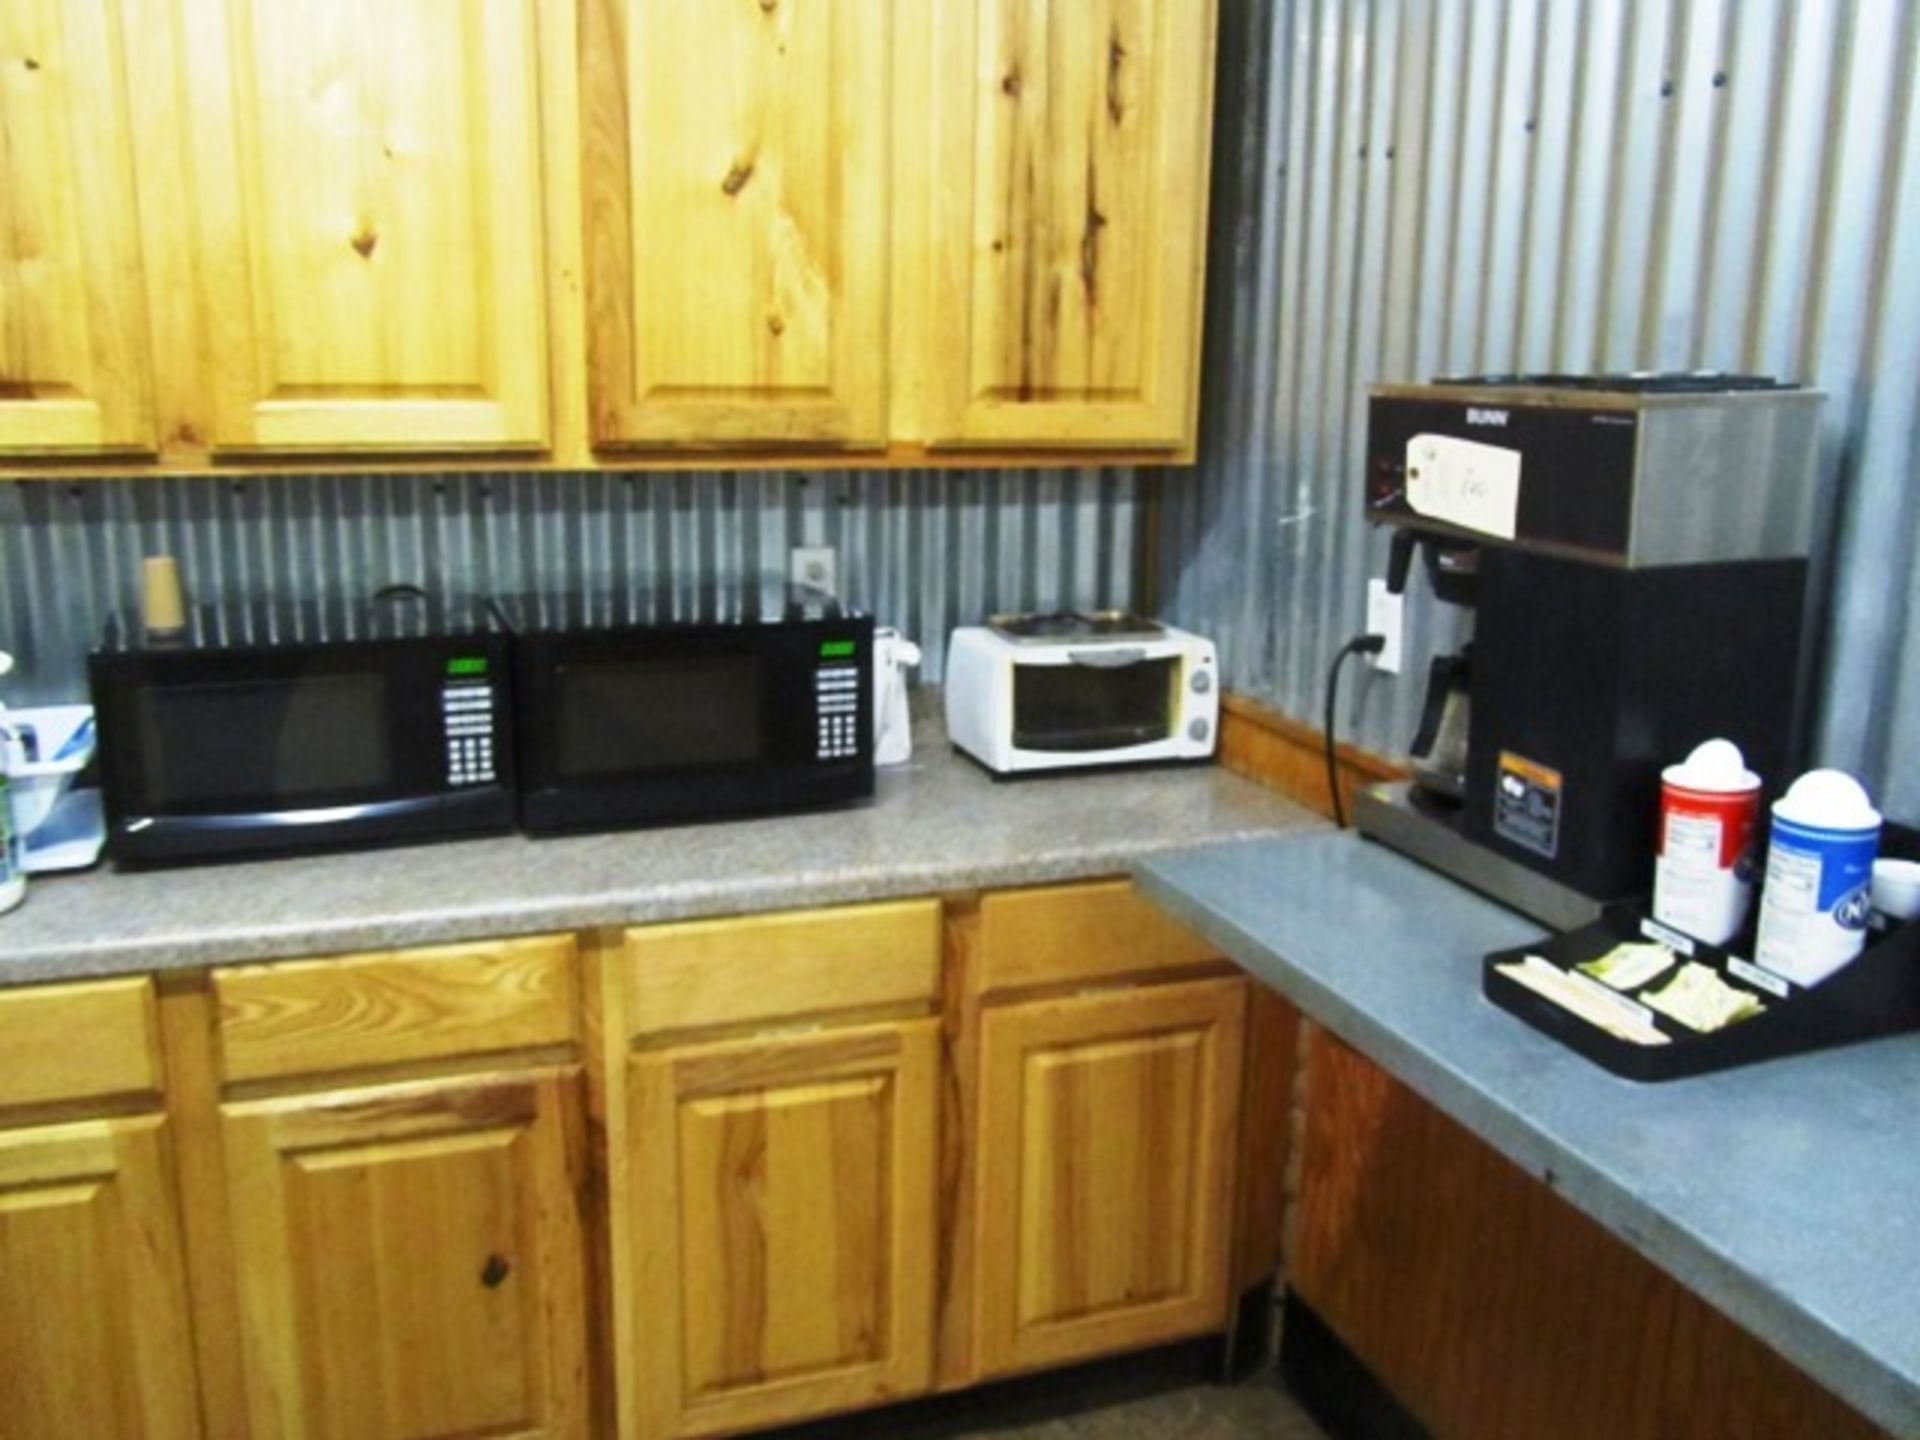 Bunn Coffee Maker & (2) Microwaves